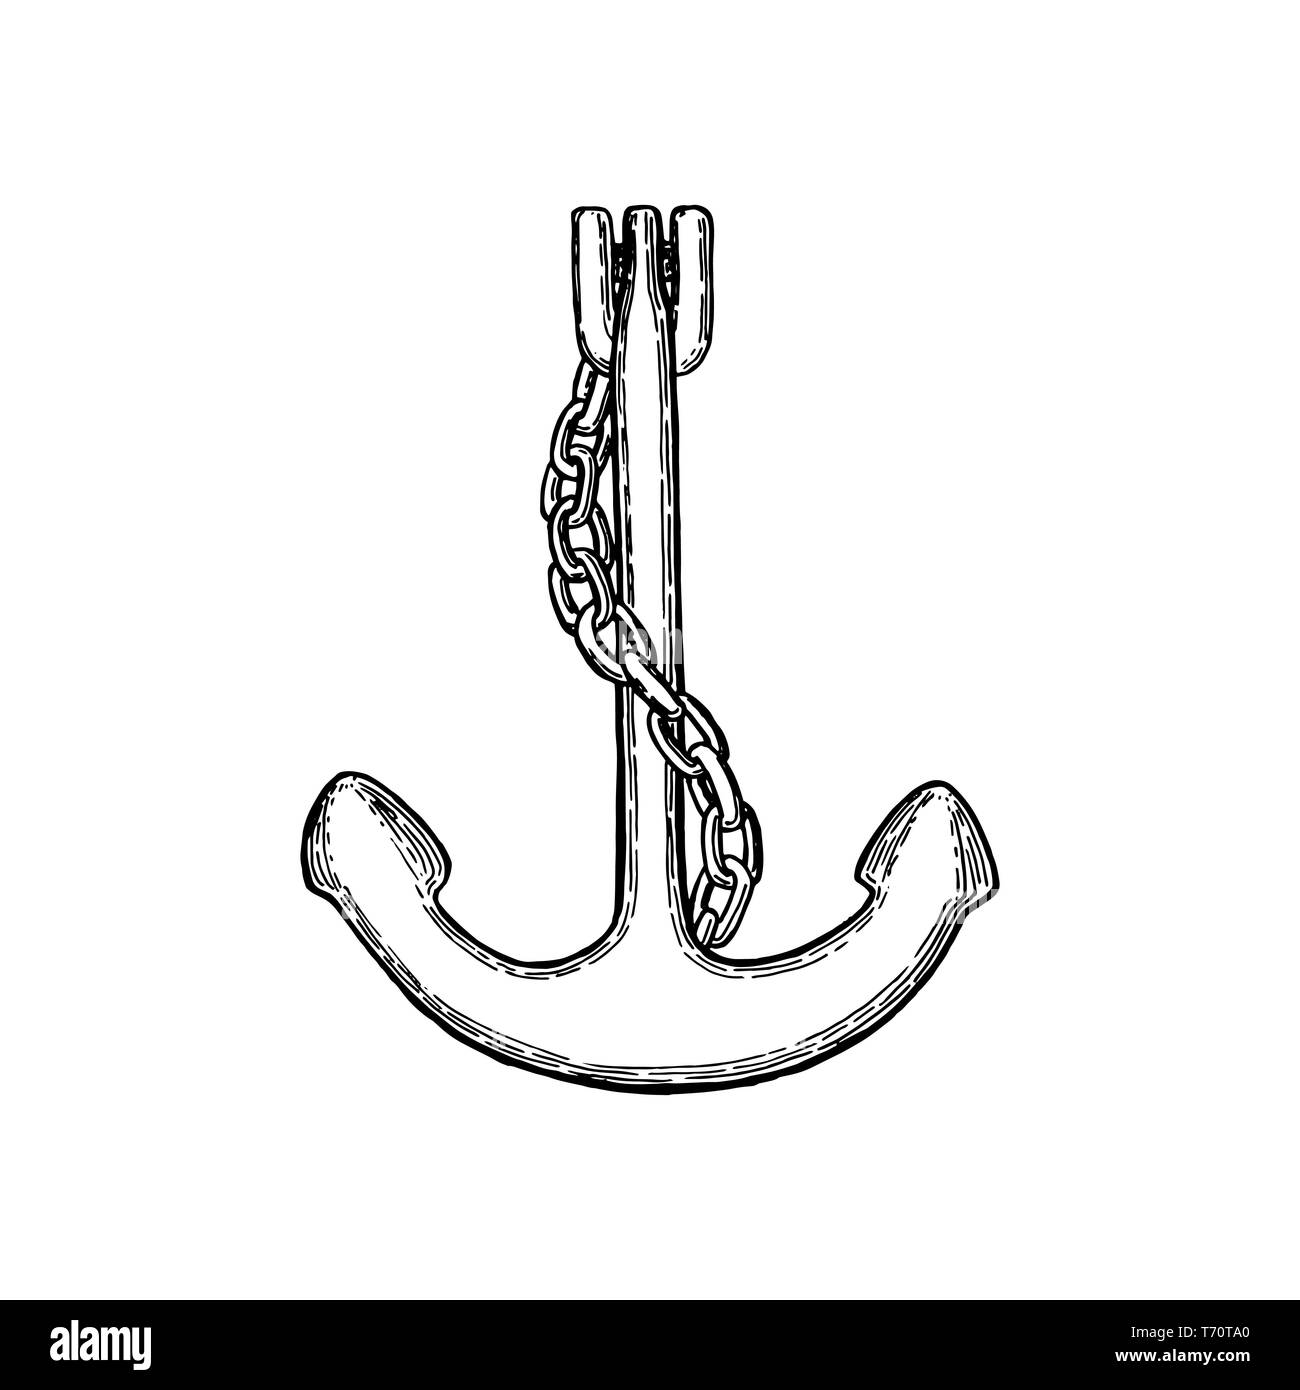 Old Anchor logo icon ink pen sketch. Nautical maritime sea ocean boat illustration symbol. Stock Vector